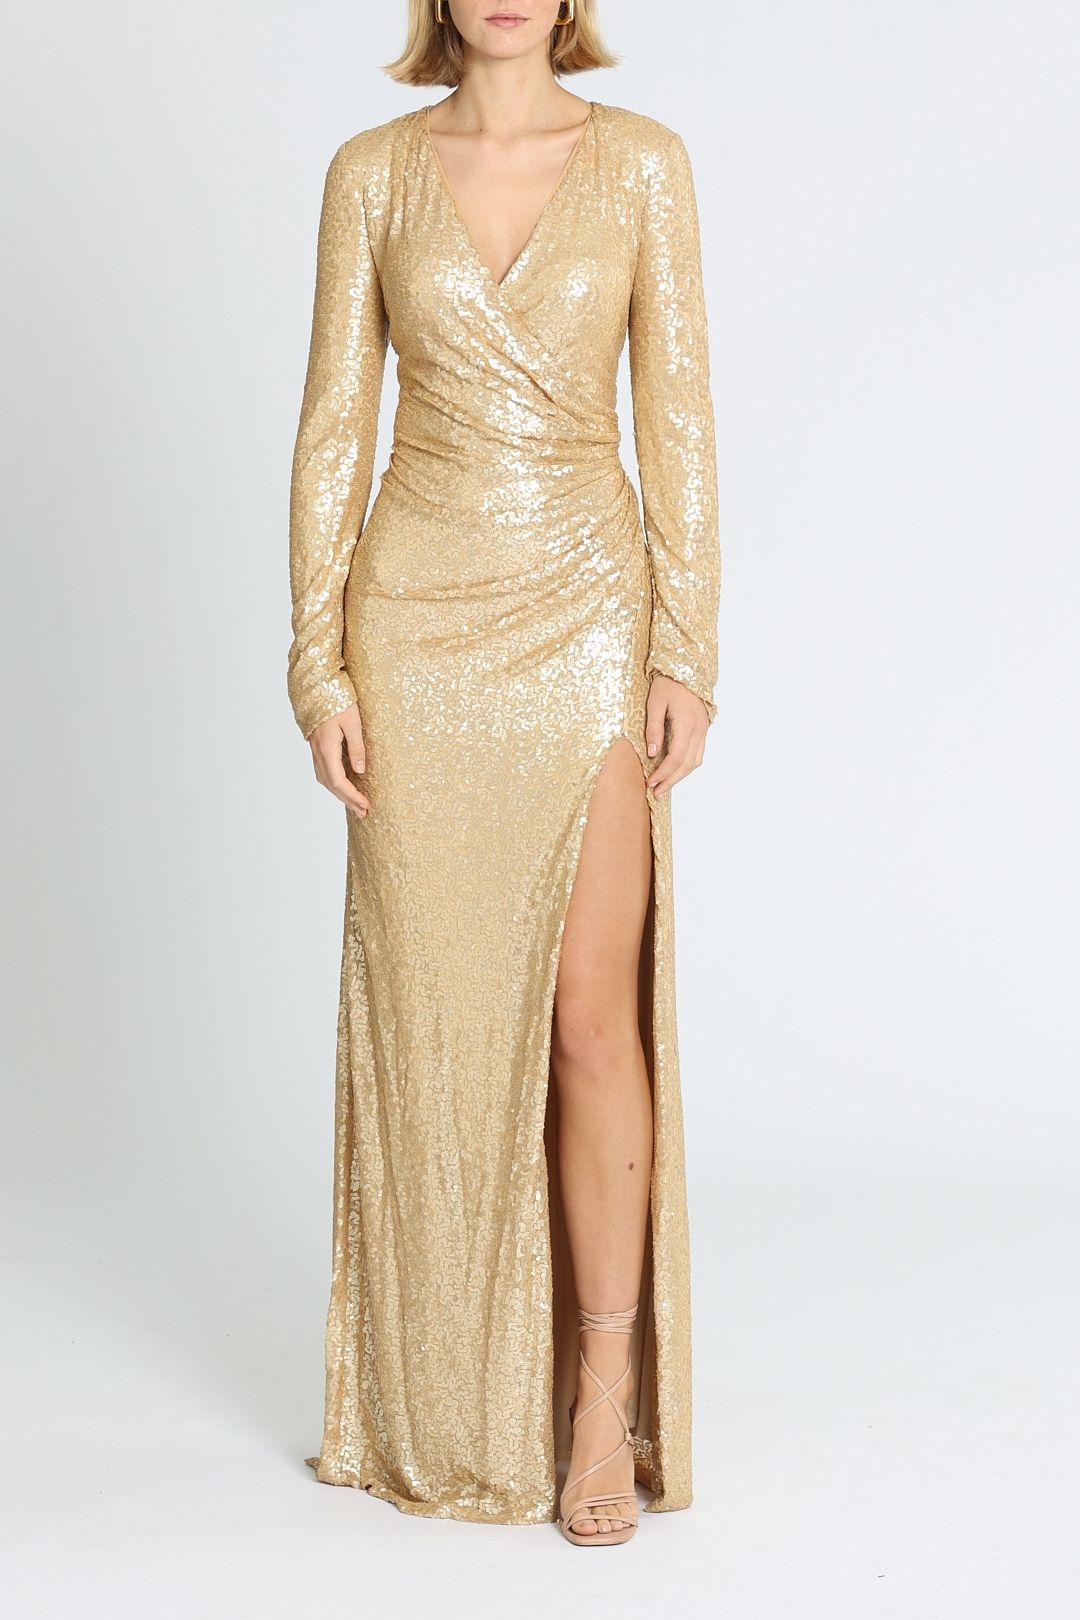 Tadashi Shoji - Angelique Gold Drape Gown Sequins